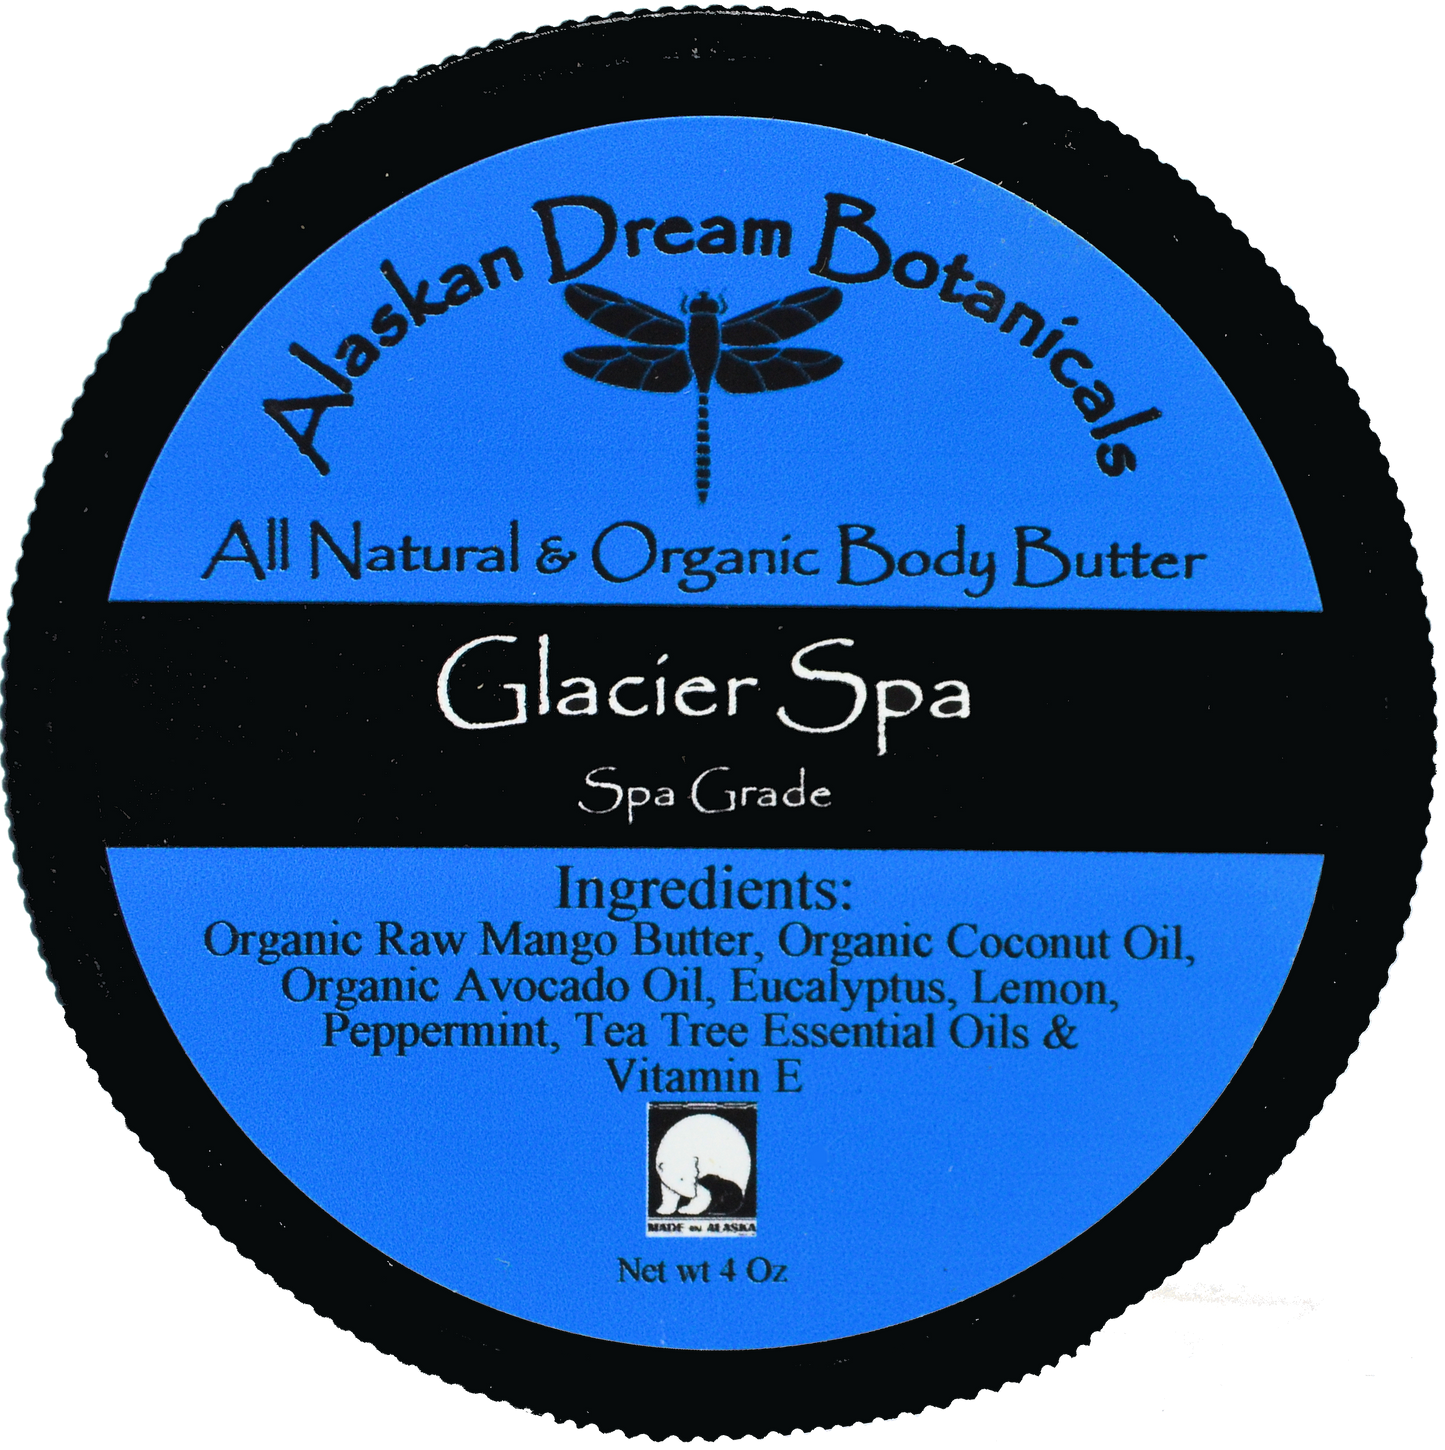 Glacier Spa (Spa Grade) Body Butter - Alaskan Dream Botanicals